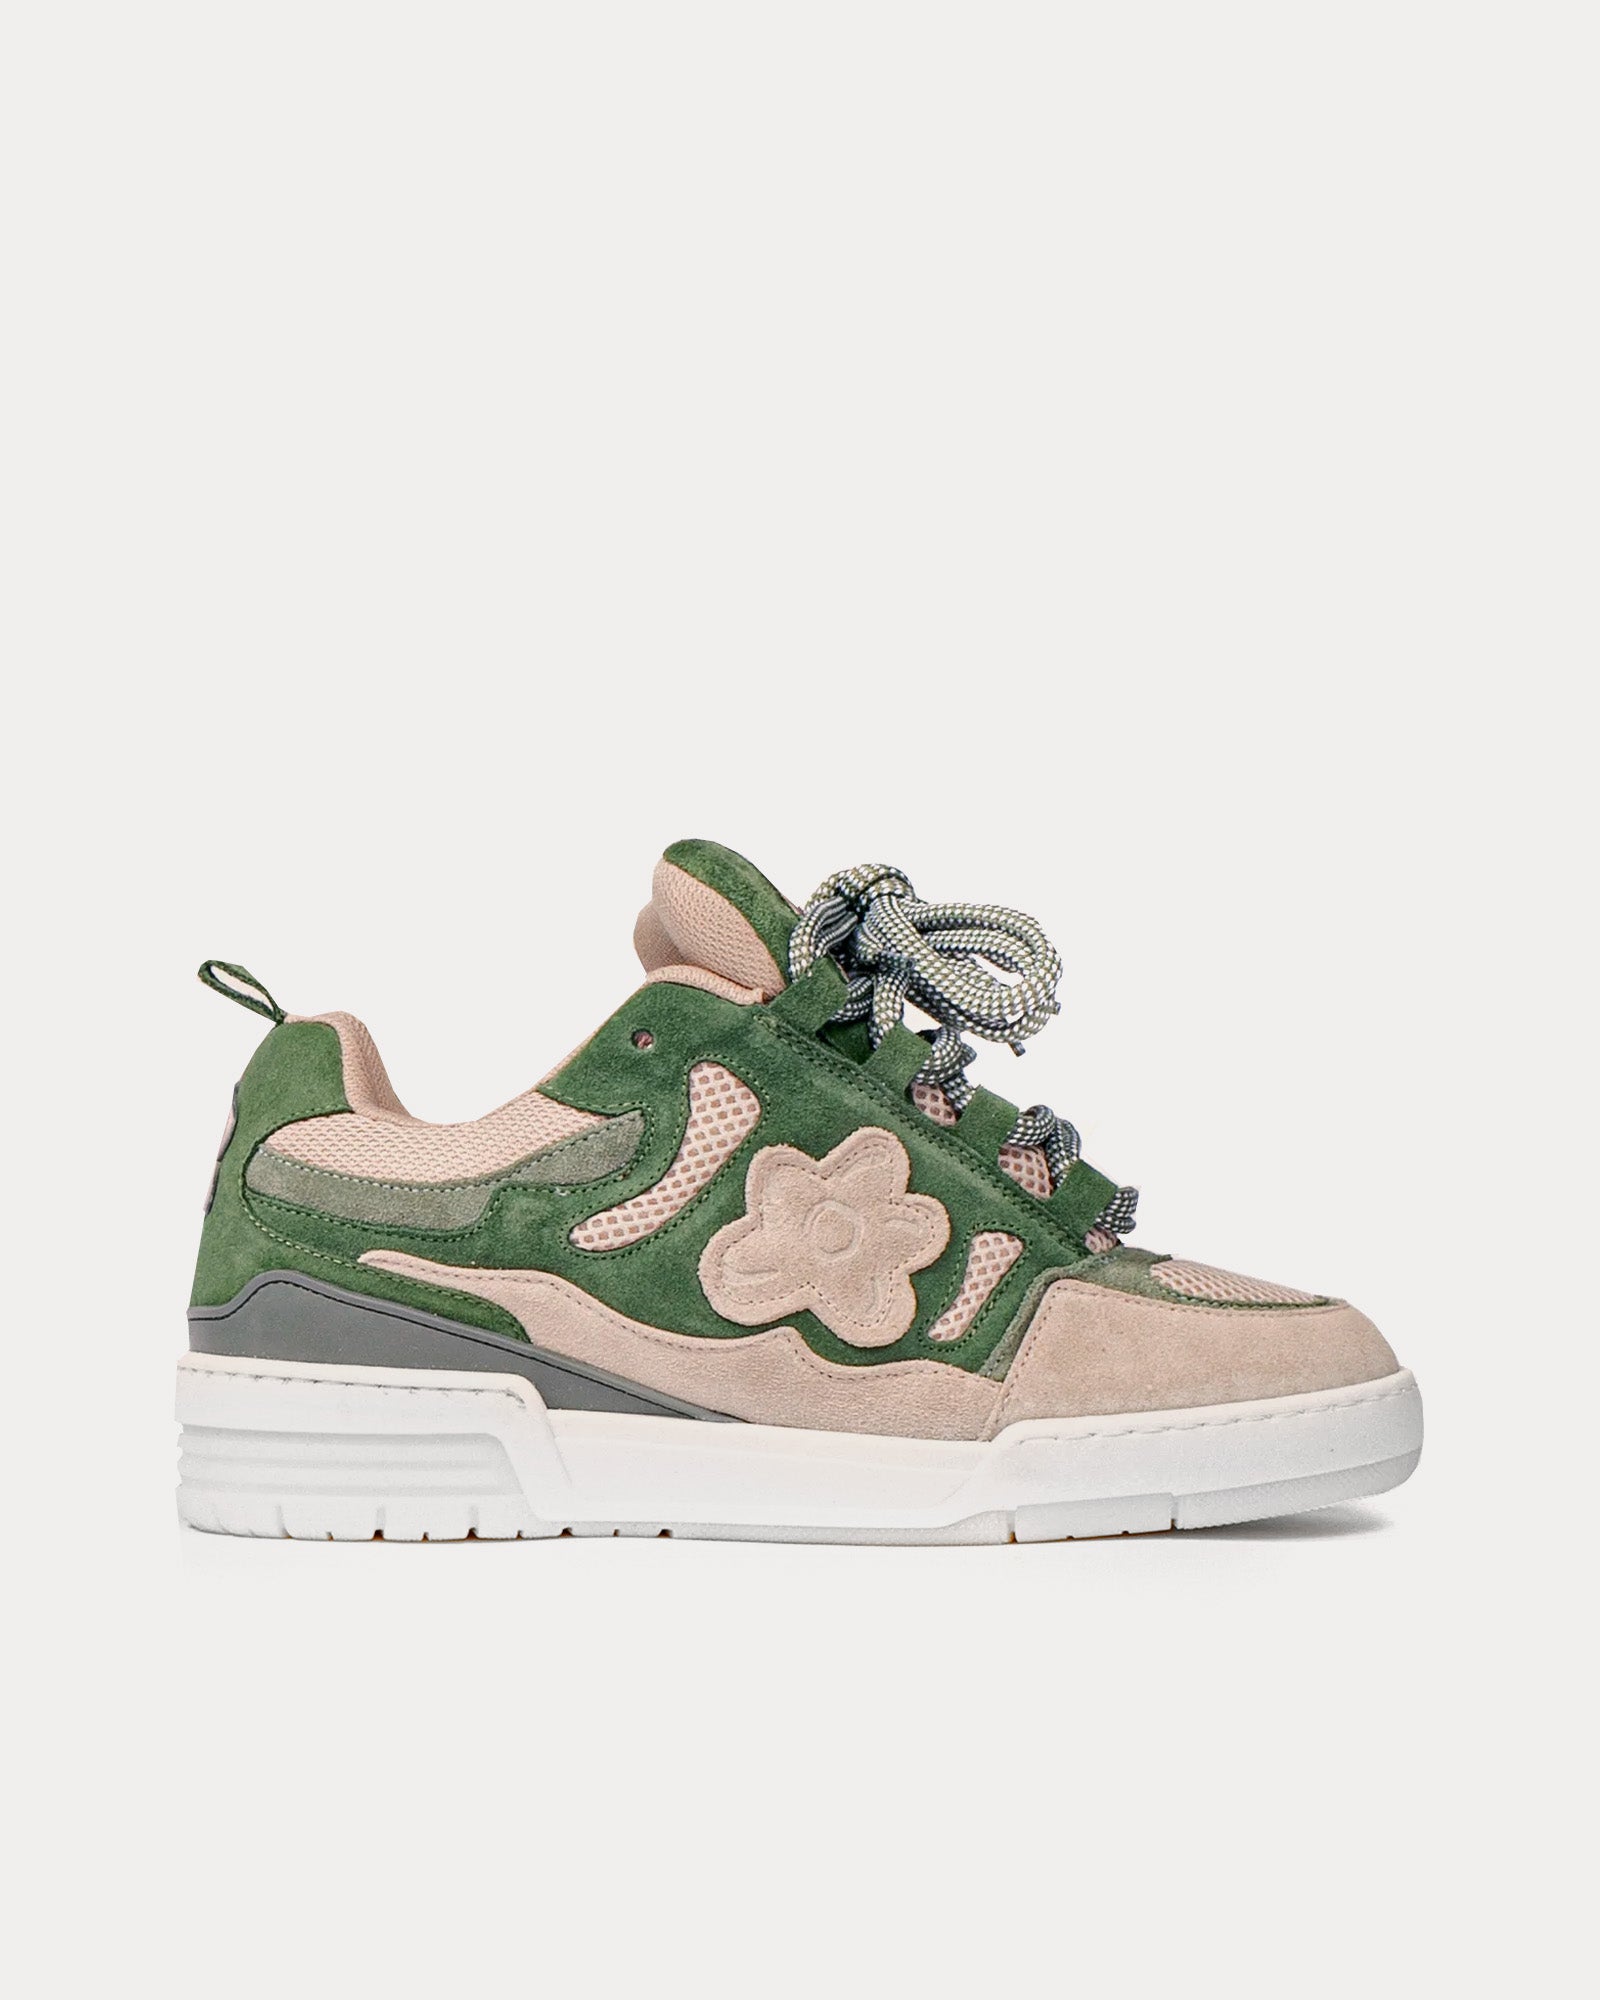 Flower Instincts x Maison Guava - Opium Green / Beige Low Top Sneakers